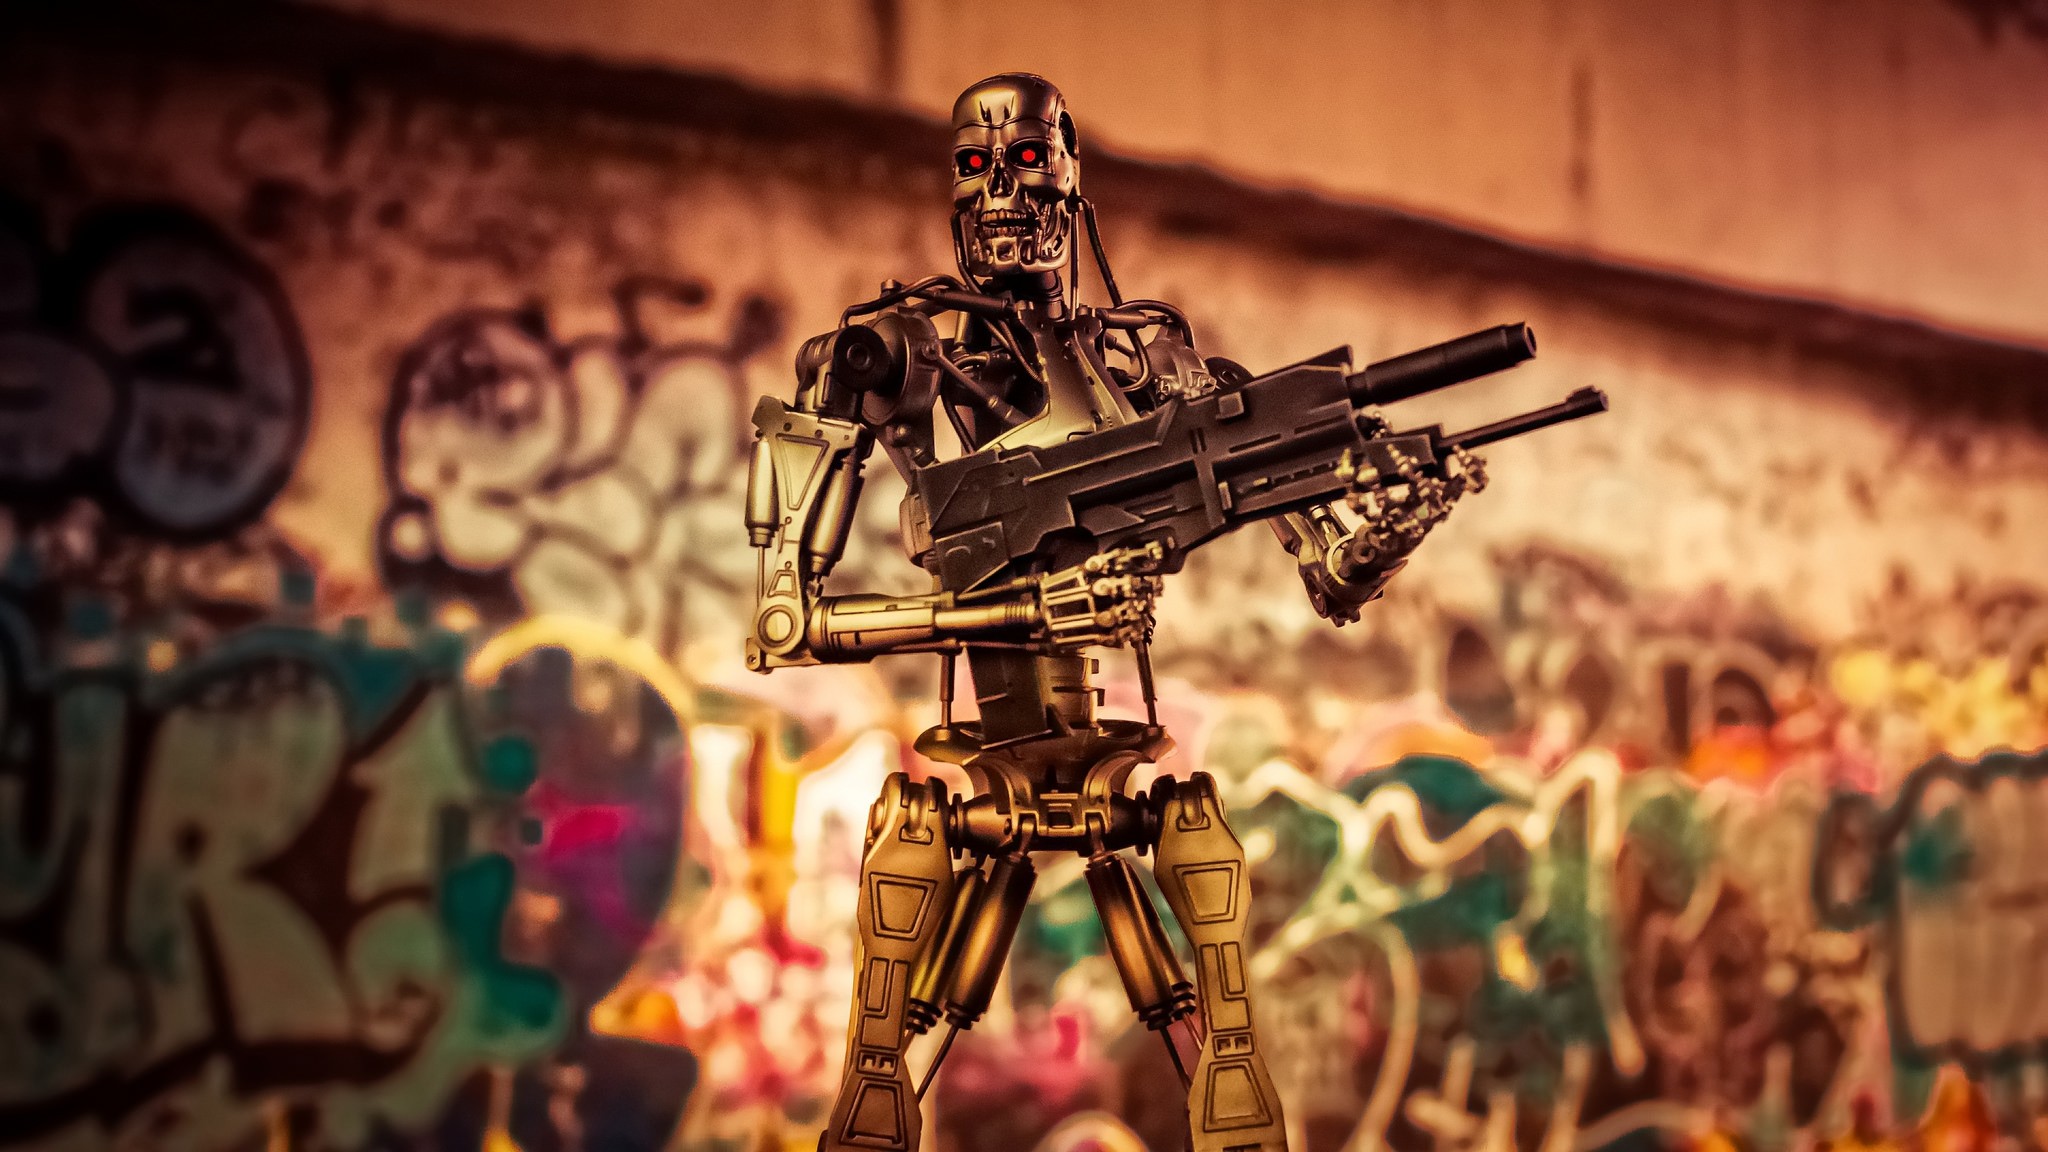 General 2048x1152 toys endoskeleton Terminator action figures cyborg machine graffiti movie characters